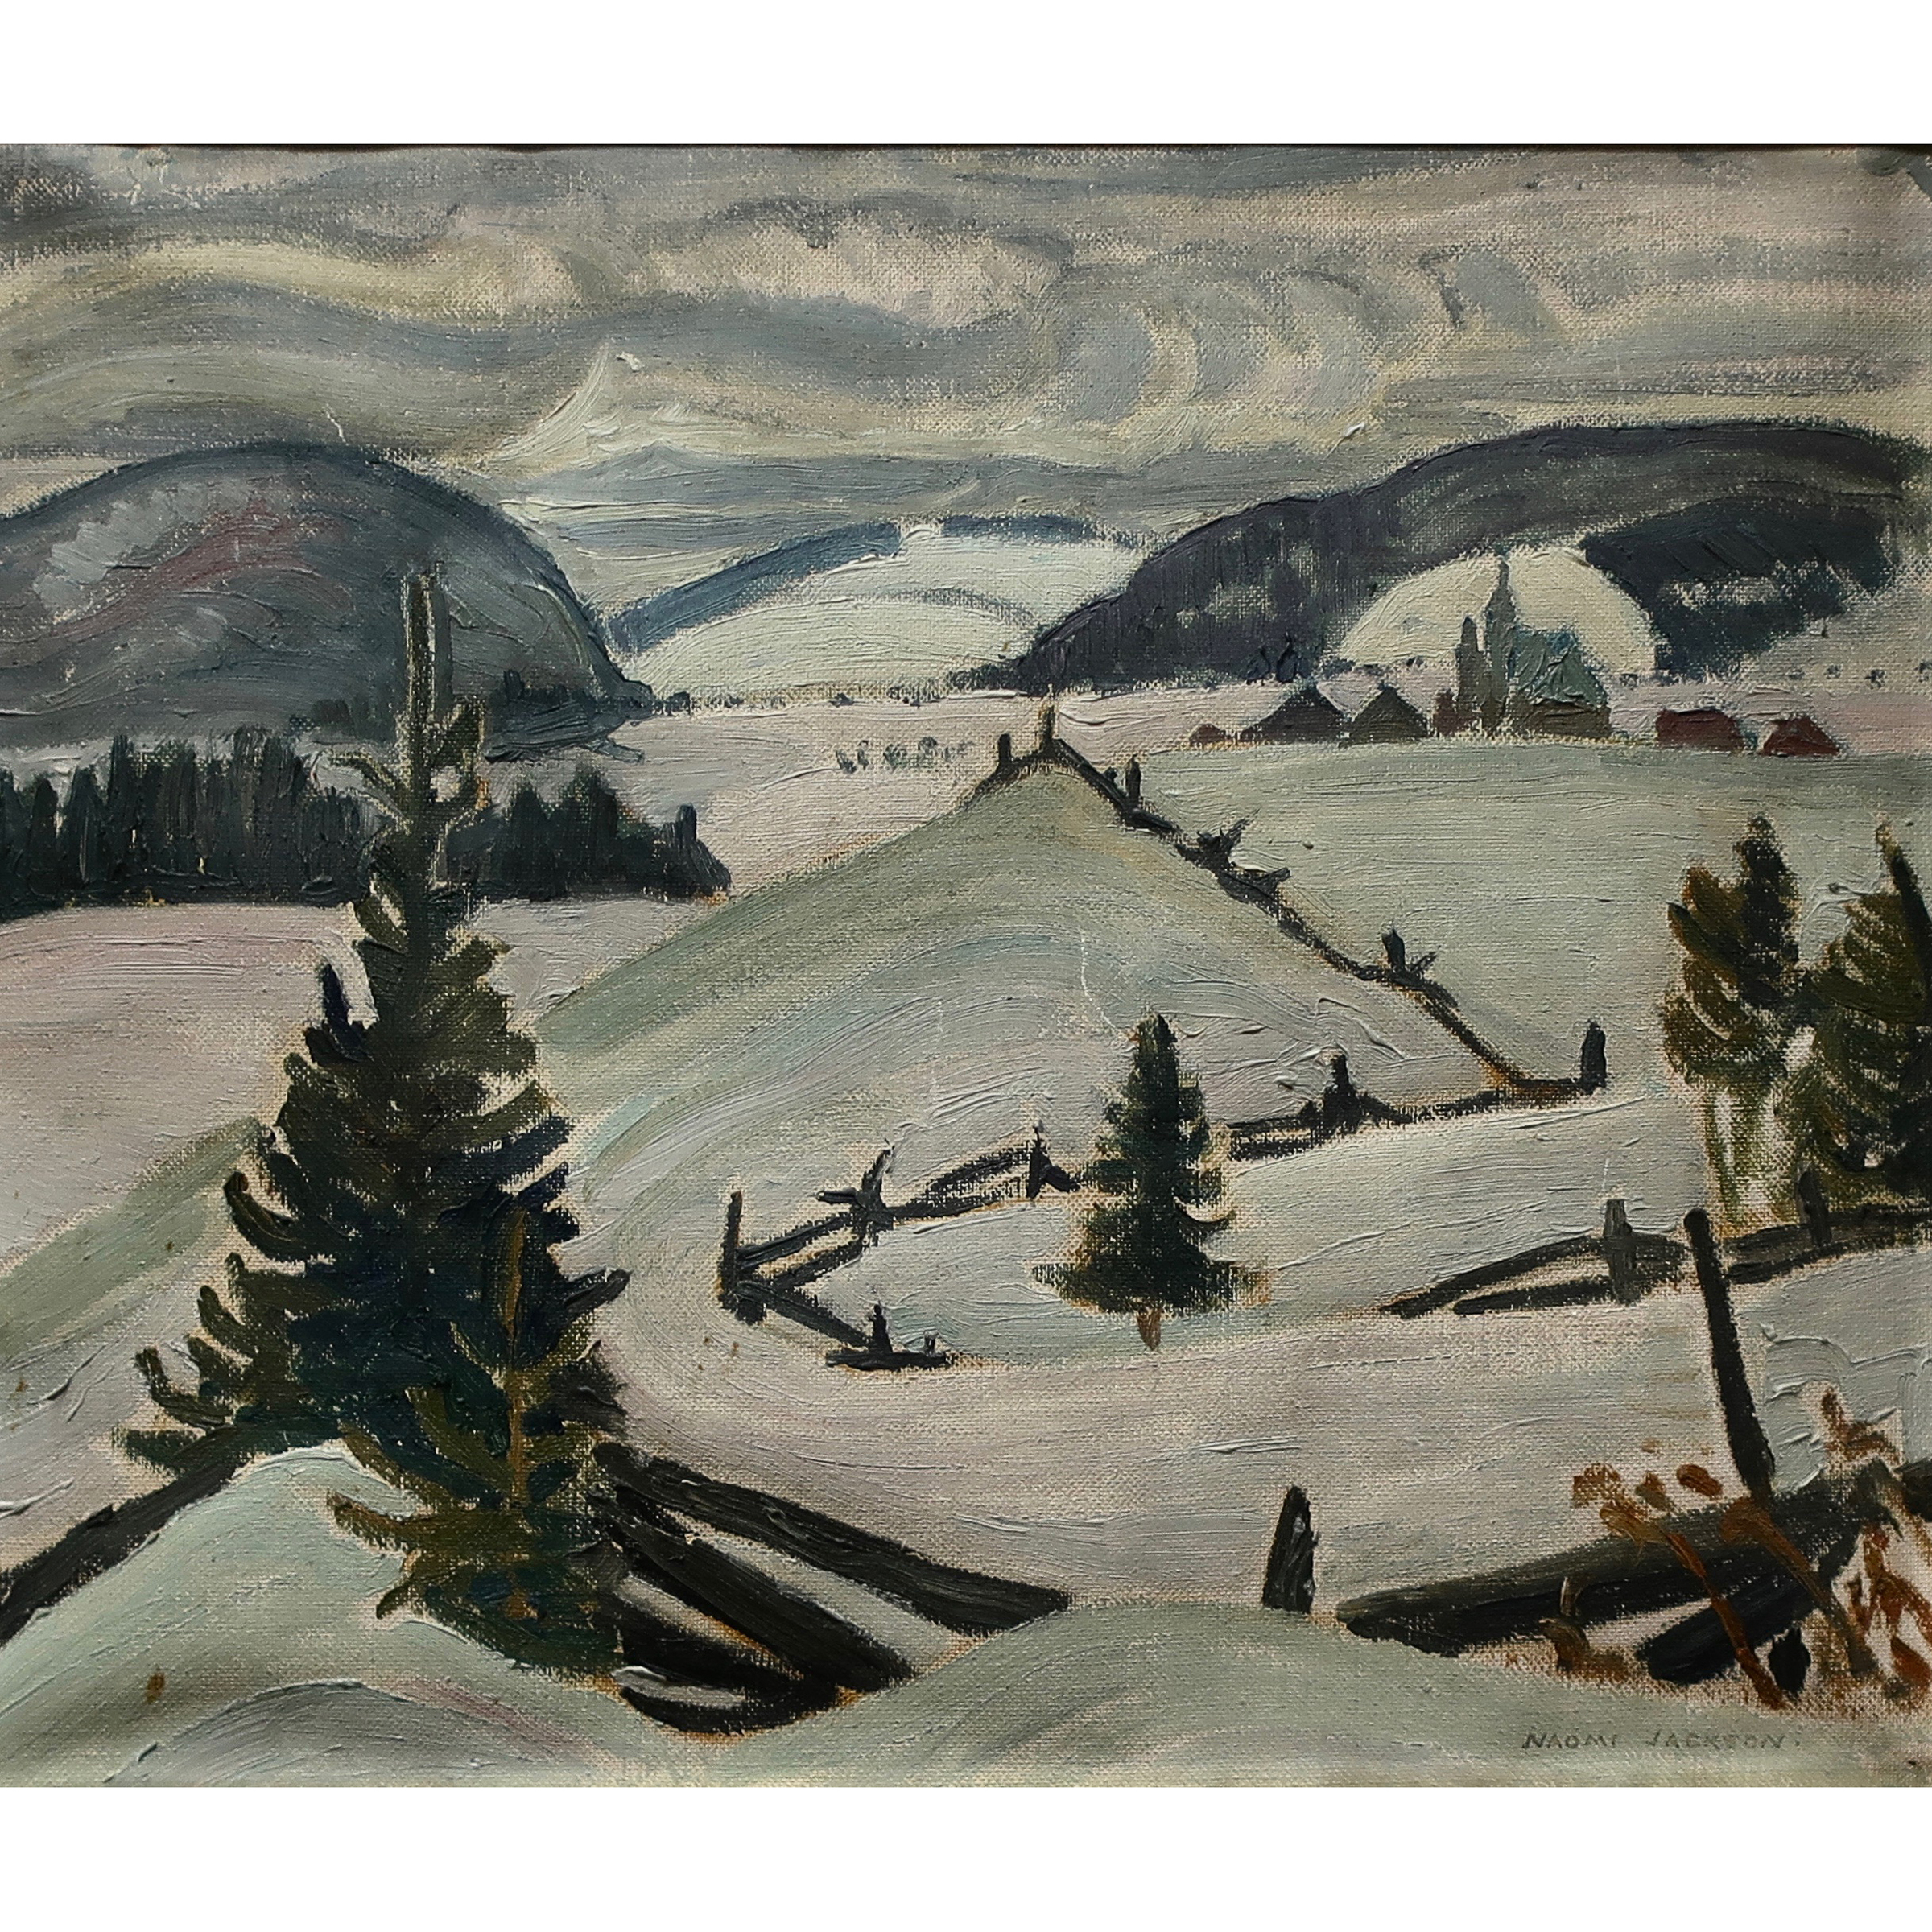 NAOMI JACKSON GROVES (CANADIAN, 1910-2001)  